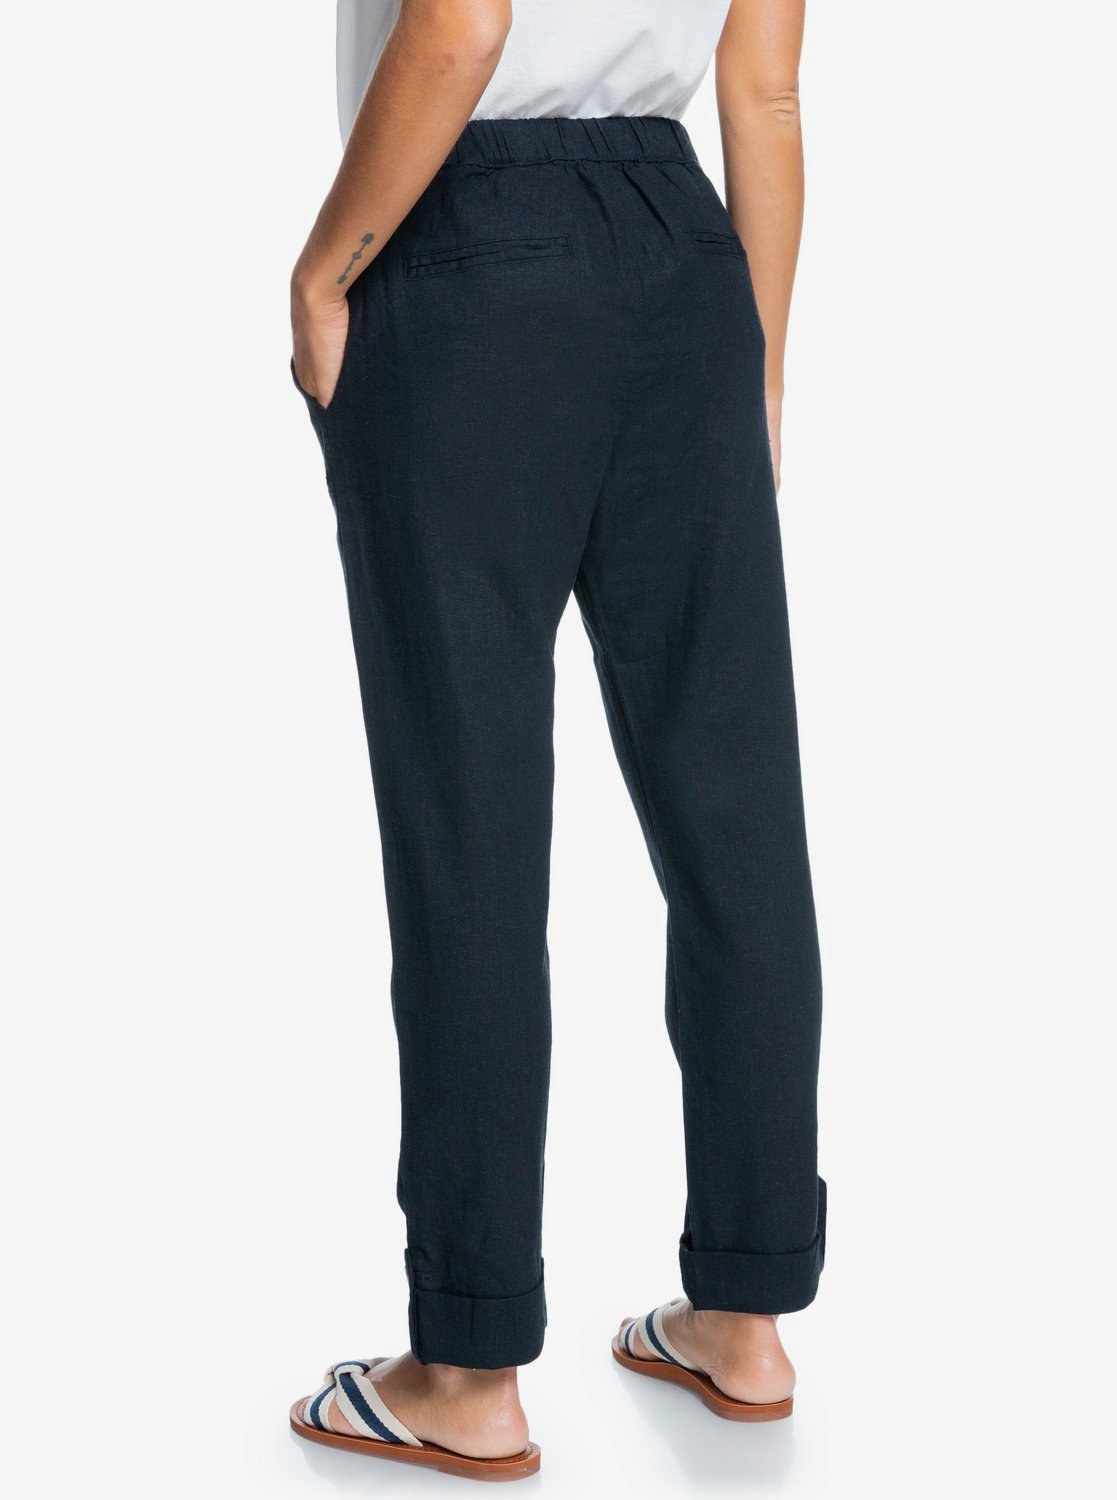 Roxy OCEANSIDE PANT - Trousers - navy/dark blue 